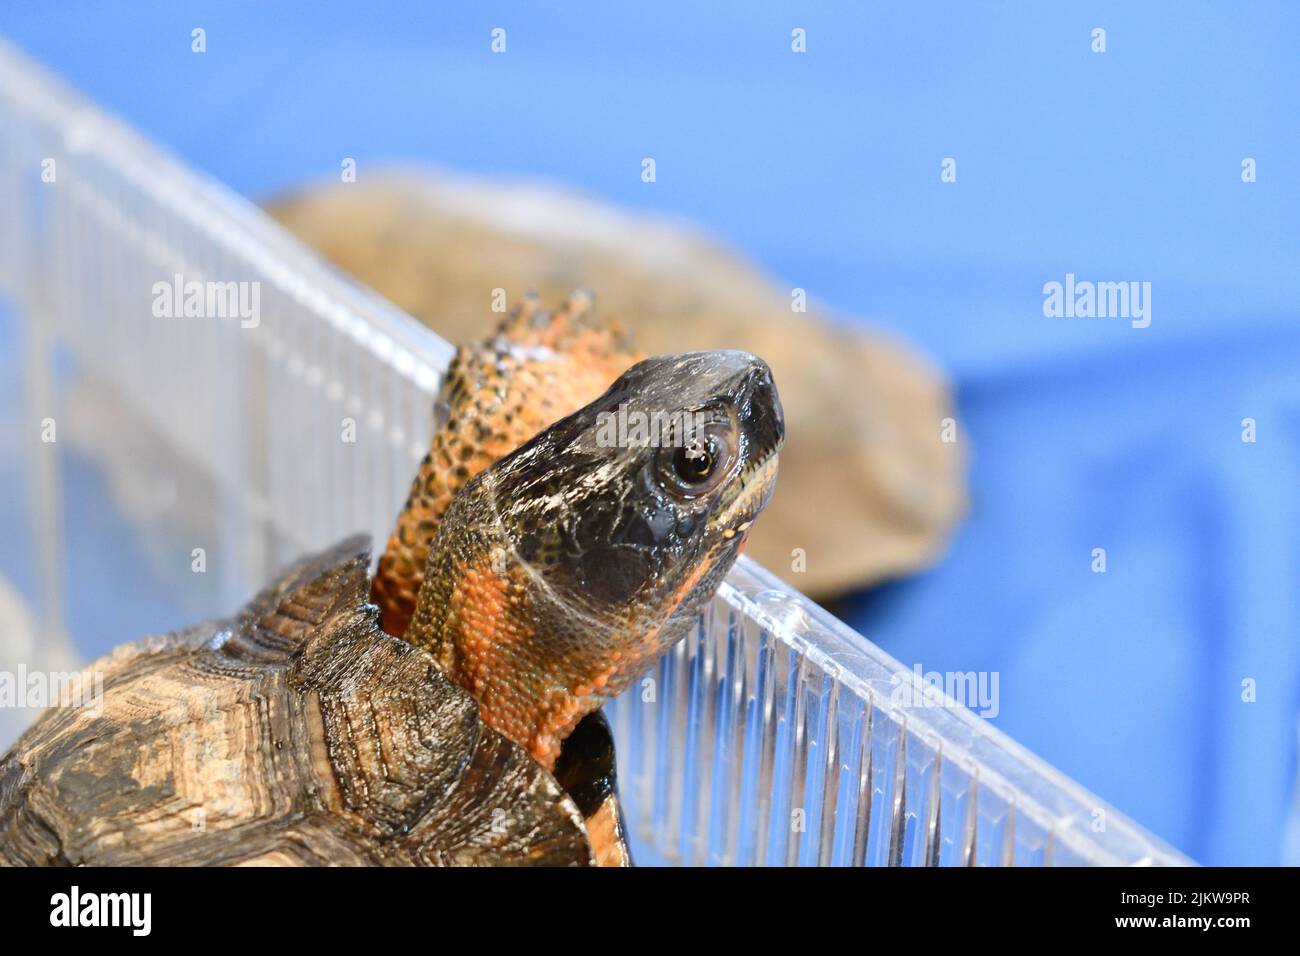 A closeup of the Russian tortoise, Testudo horsfieldii. Stock Photo